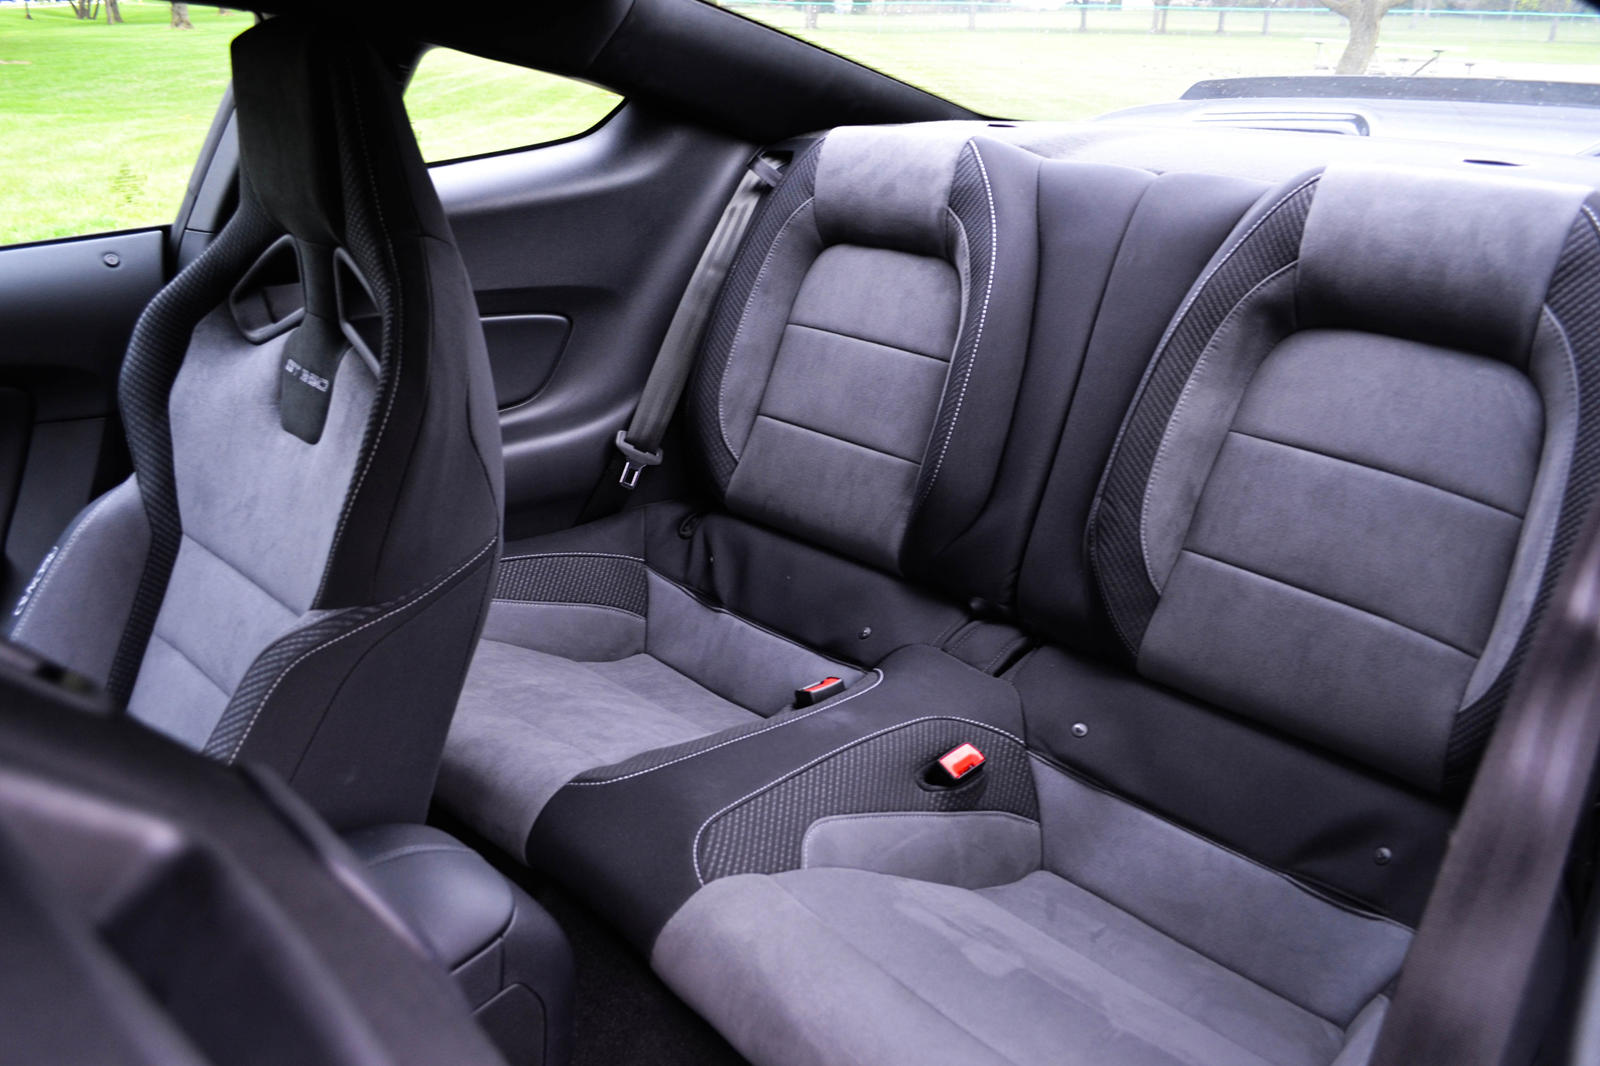 2020 Ford Mustang Back Seats Interior